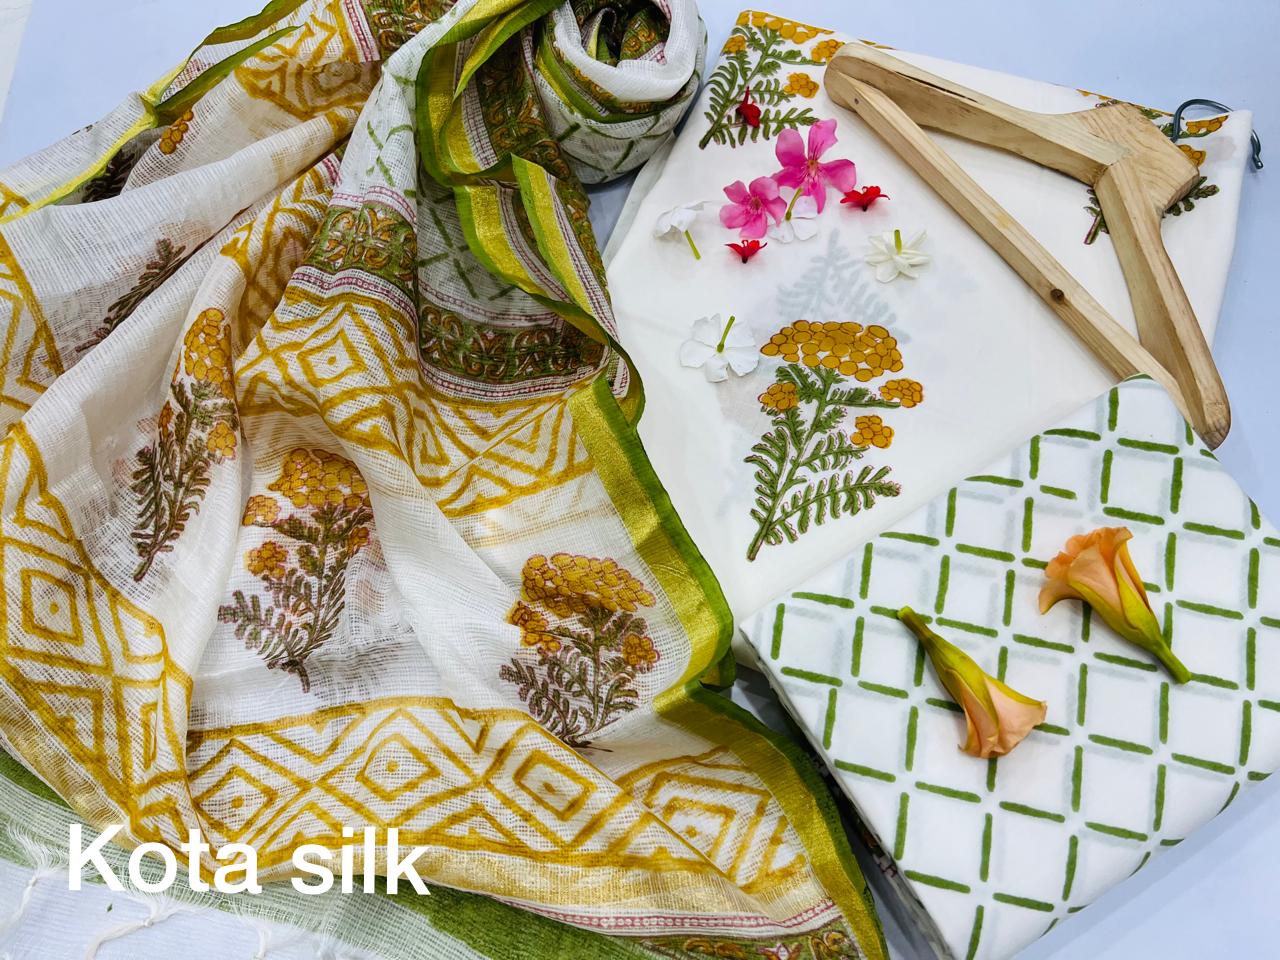 White and jungle green mugal print cotton ethnic dresses for women with kota silk dupatta